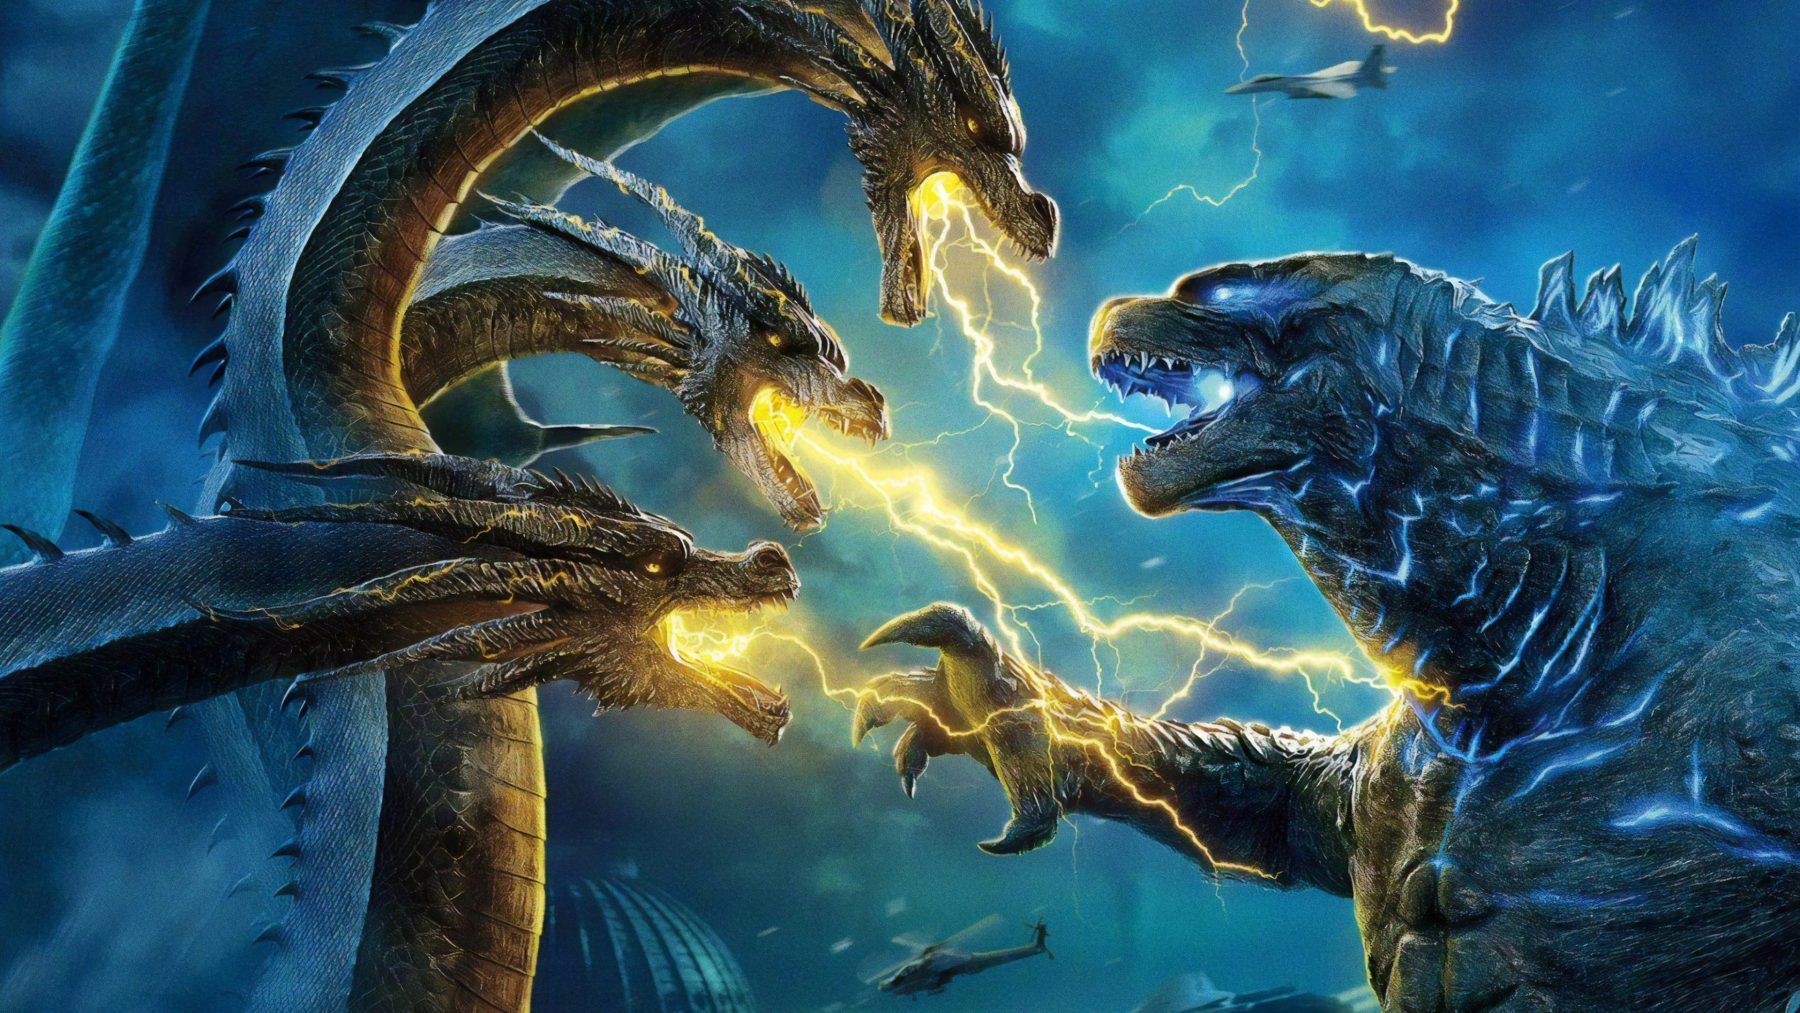 Godzilla: King of the Monsters HD Wallpaperwallpaper.net